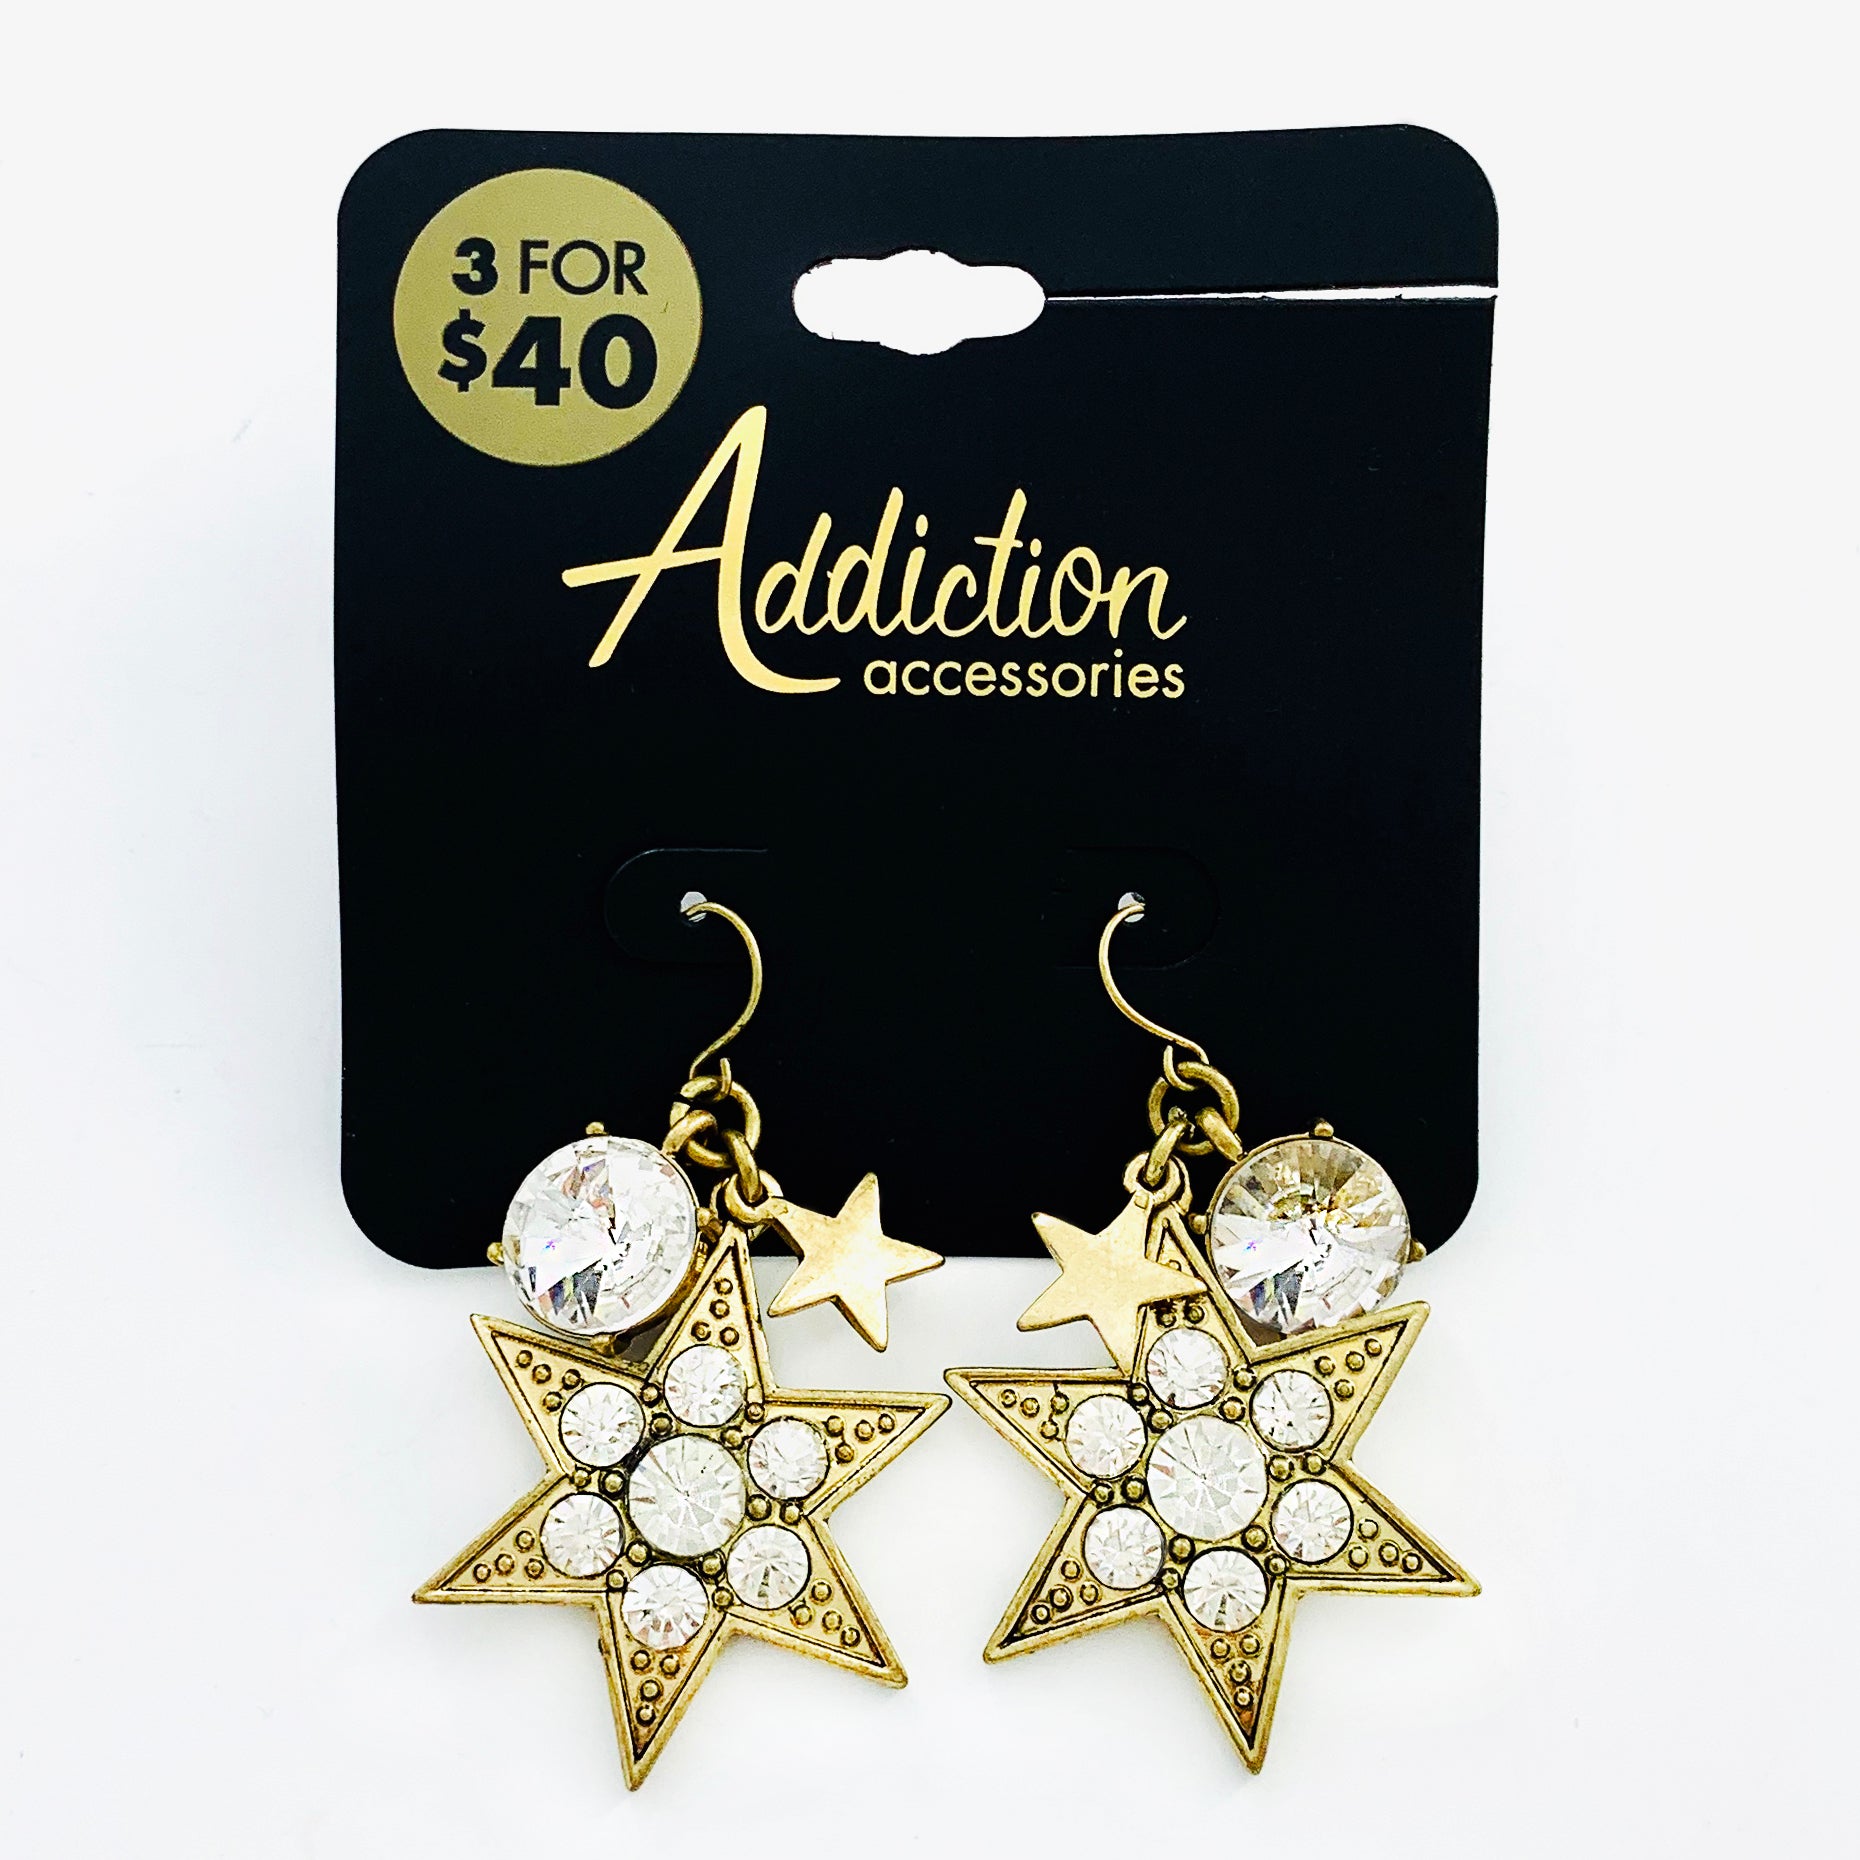 Dark gold star earrings with diamante stones